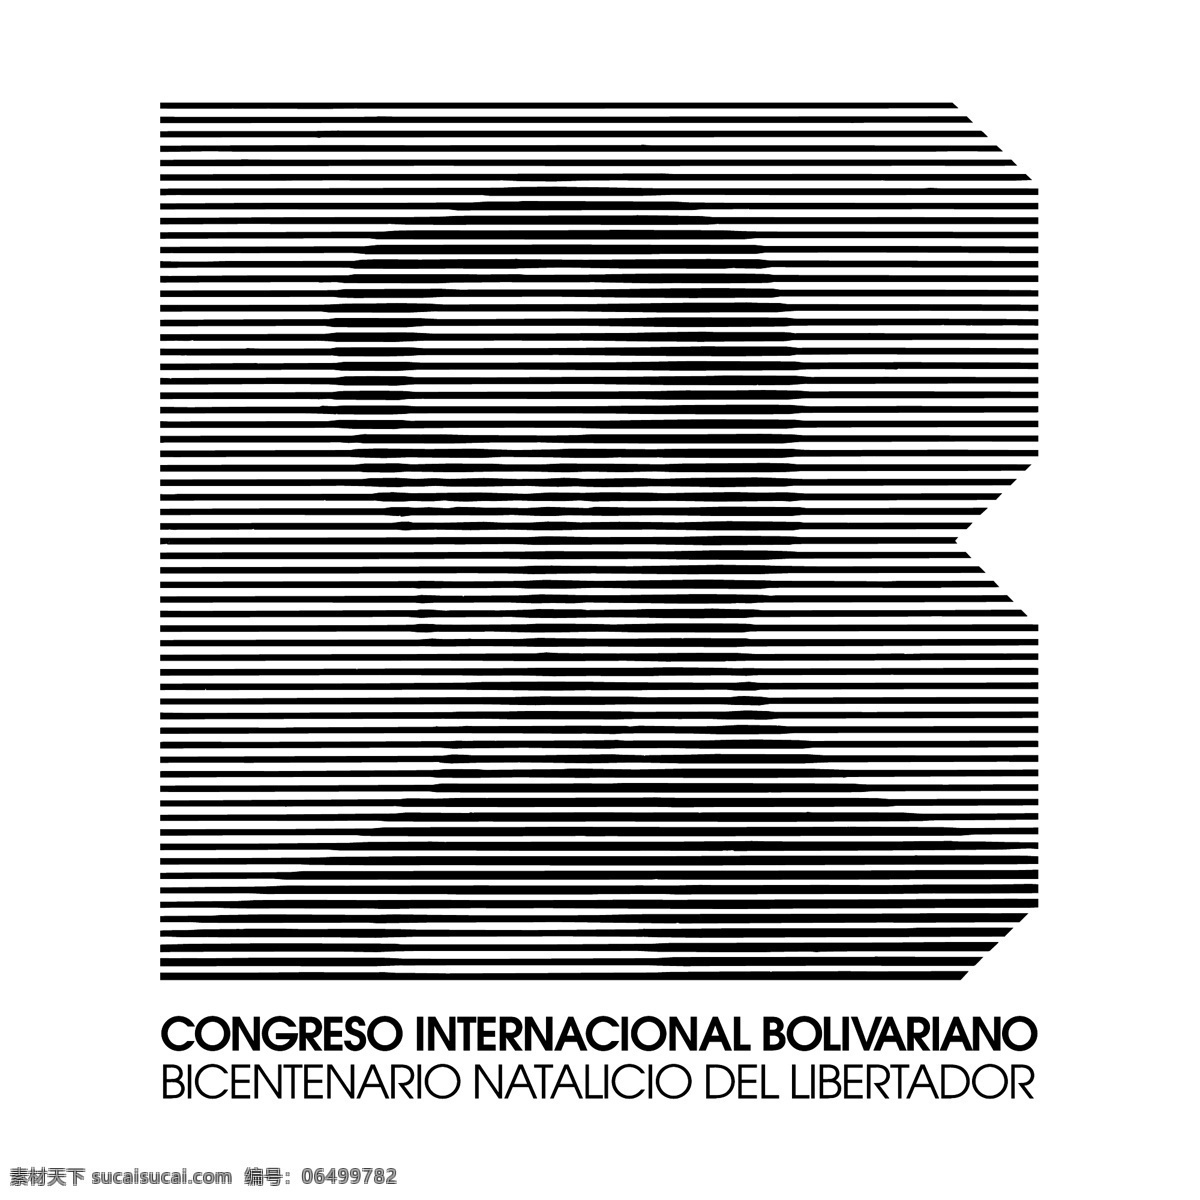 bicentenario 纳塔利 西奥 删除 六区 1983 皇家 社会 委内瑞拉 玻利瓦尔 纳塔利西奥 删除六区 皇家社会队 标志 矢量 办公室 一个删除一个 矢量图 建筑家居